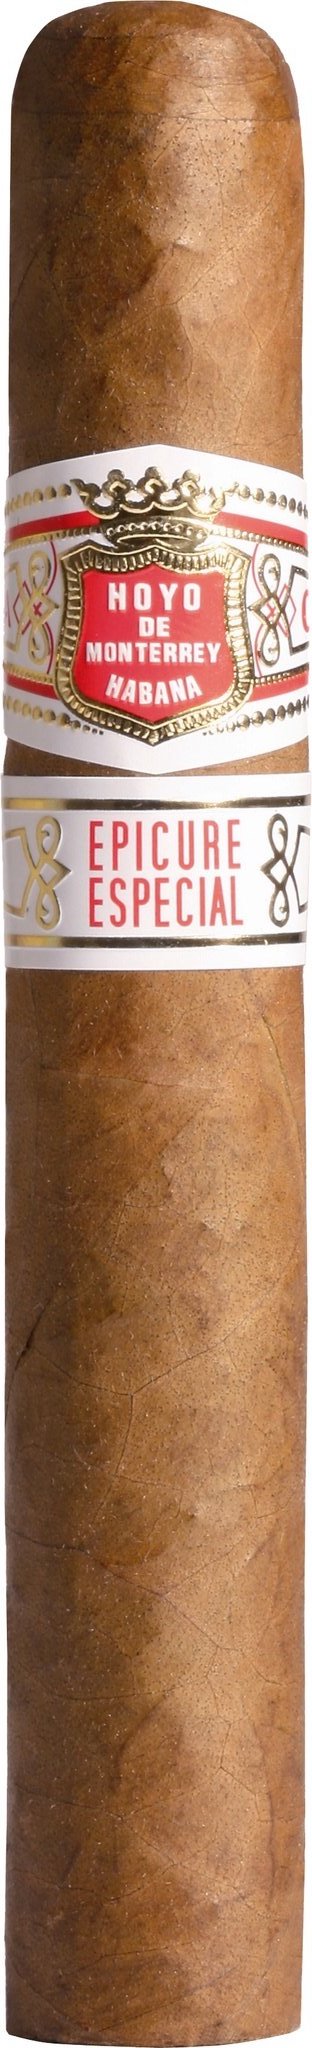 alt-Hoyo-de-Monterrey-Epicure-Especial-Cigars.jpeg